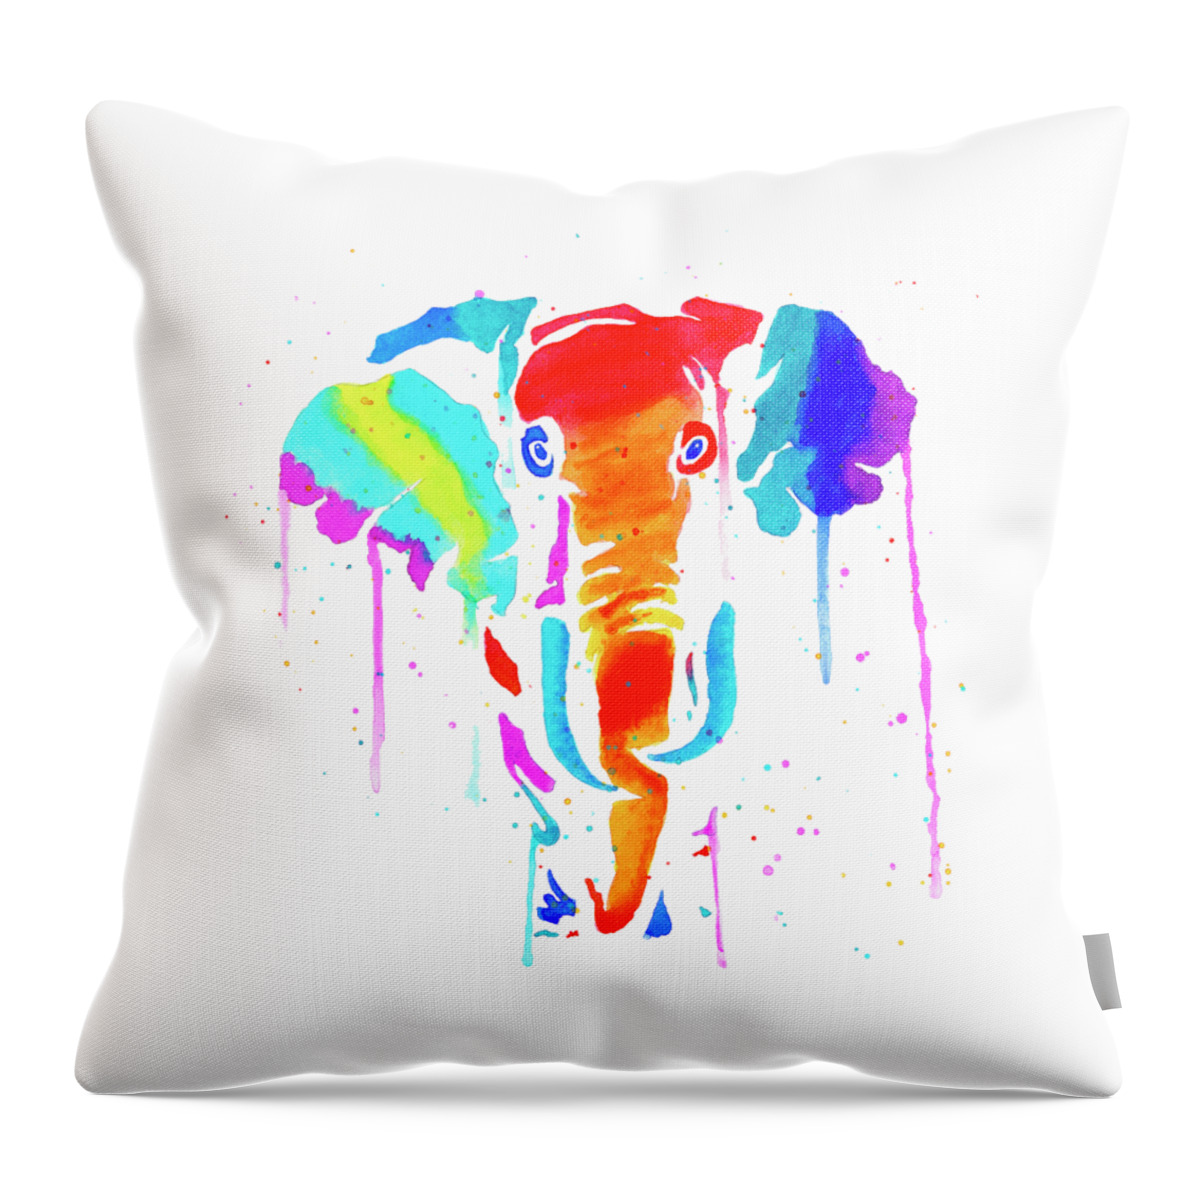 Elephant Throw Pillow featuring the painting Elephant Drip Art by Deborah League